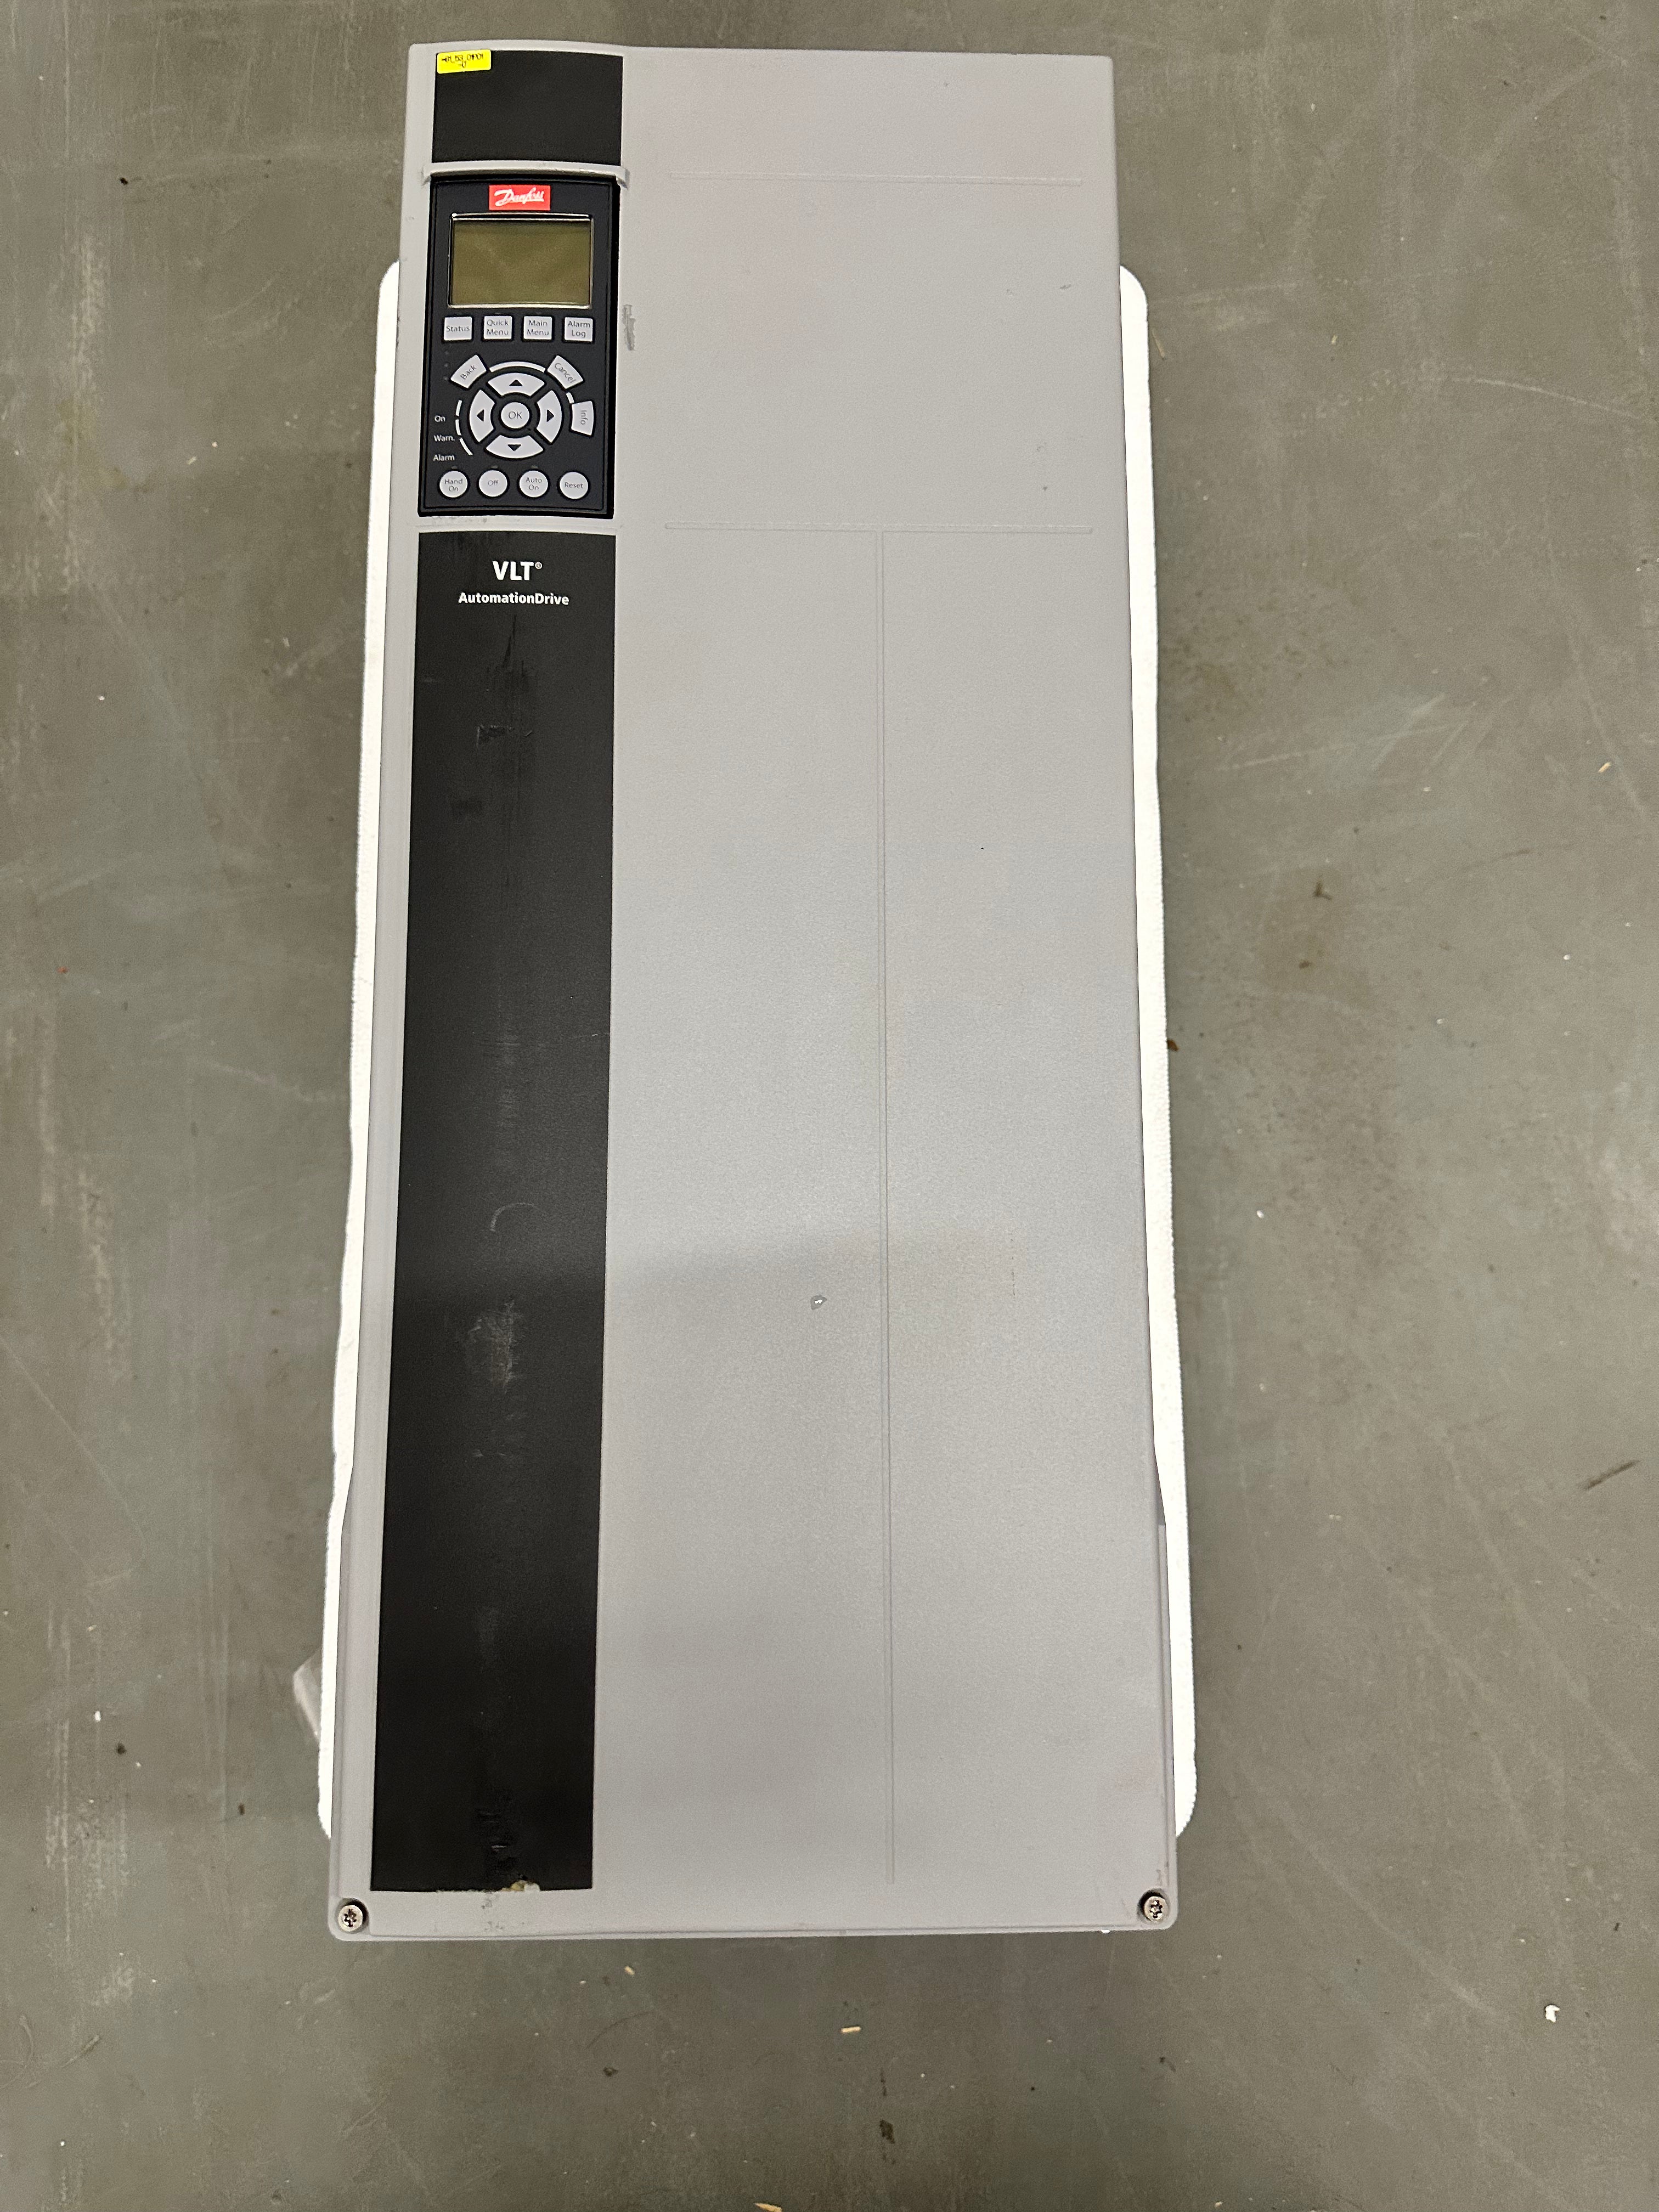 Convertidor de frecuencia Danfoss VLT® AutomationDrive FC-301